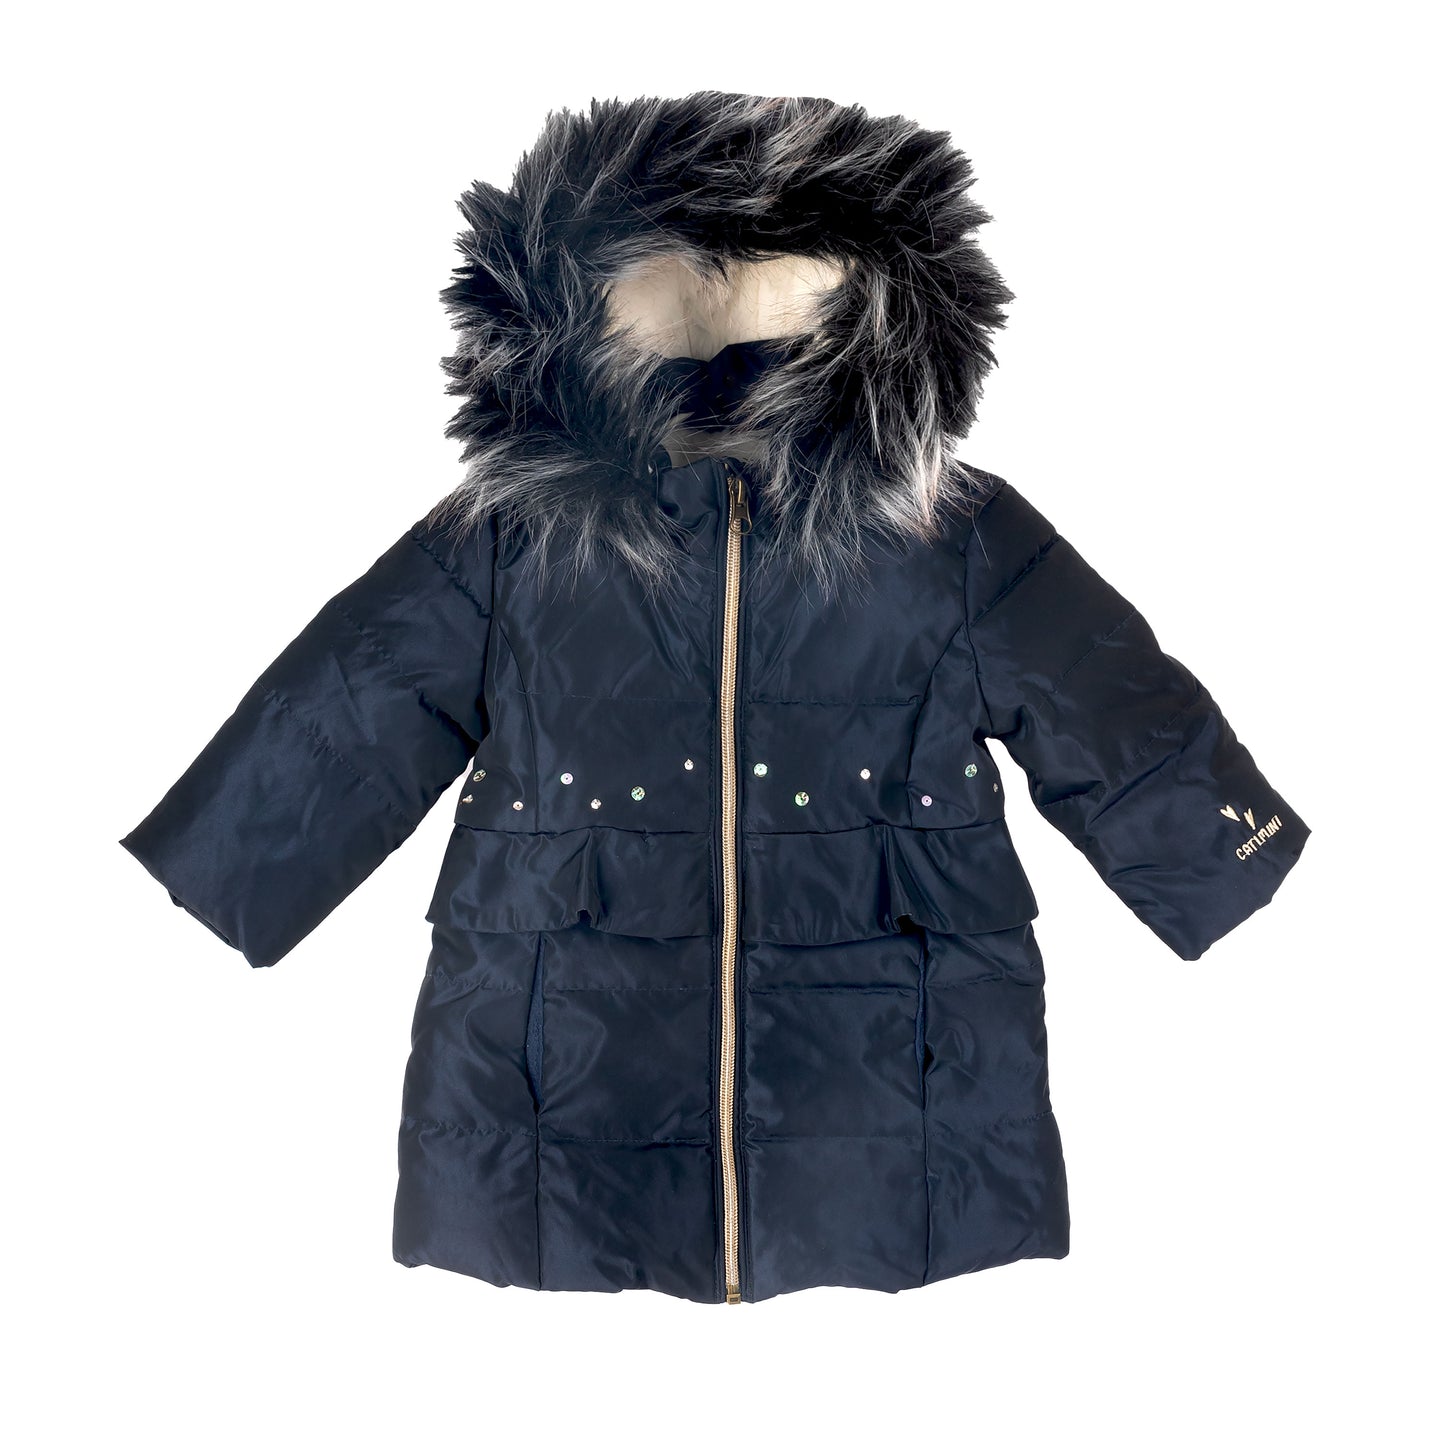 [12-18m] Catimini Navy Girls Sherpa Lined Long Coat w/Faux Fur Hood